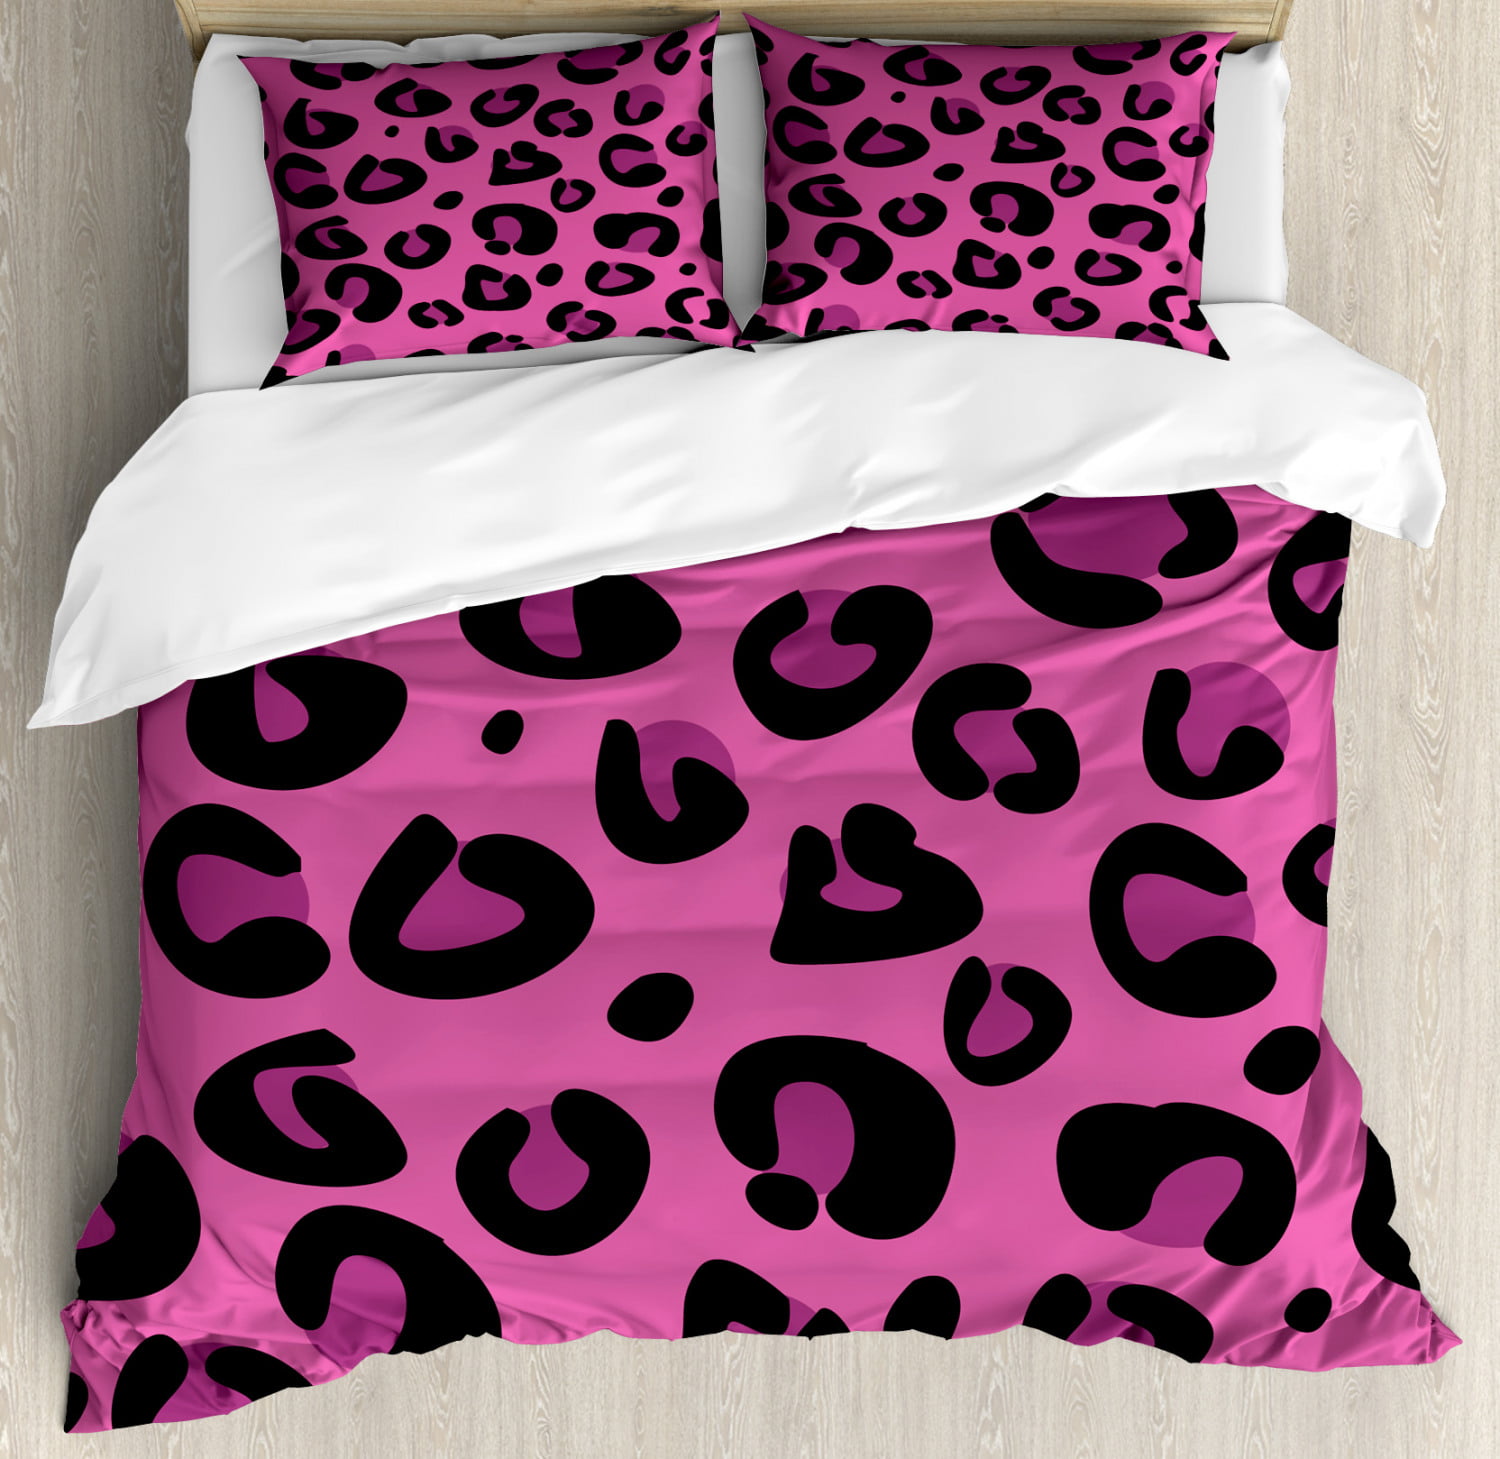 Hot Pink Duvet Cover Set Queen Size, Leopard Duvet Cover